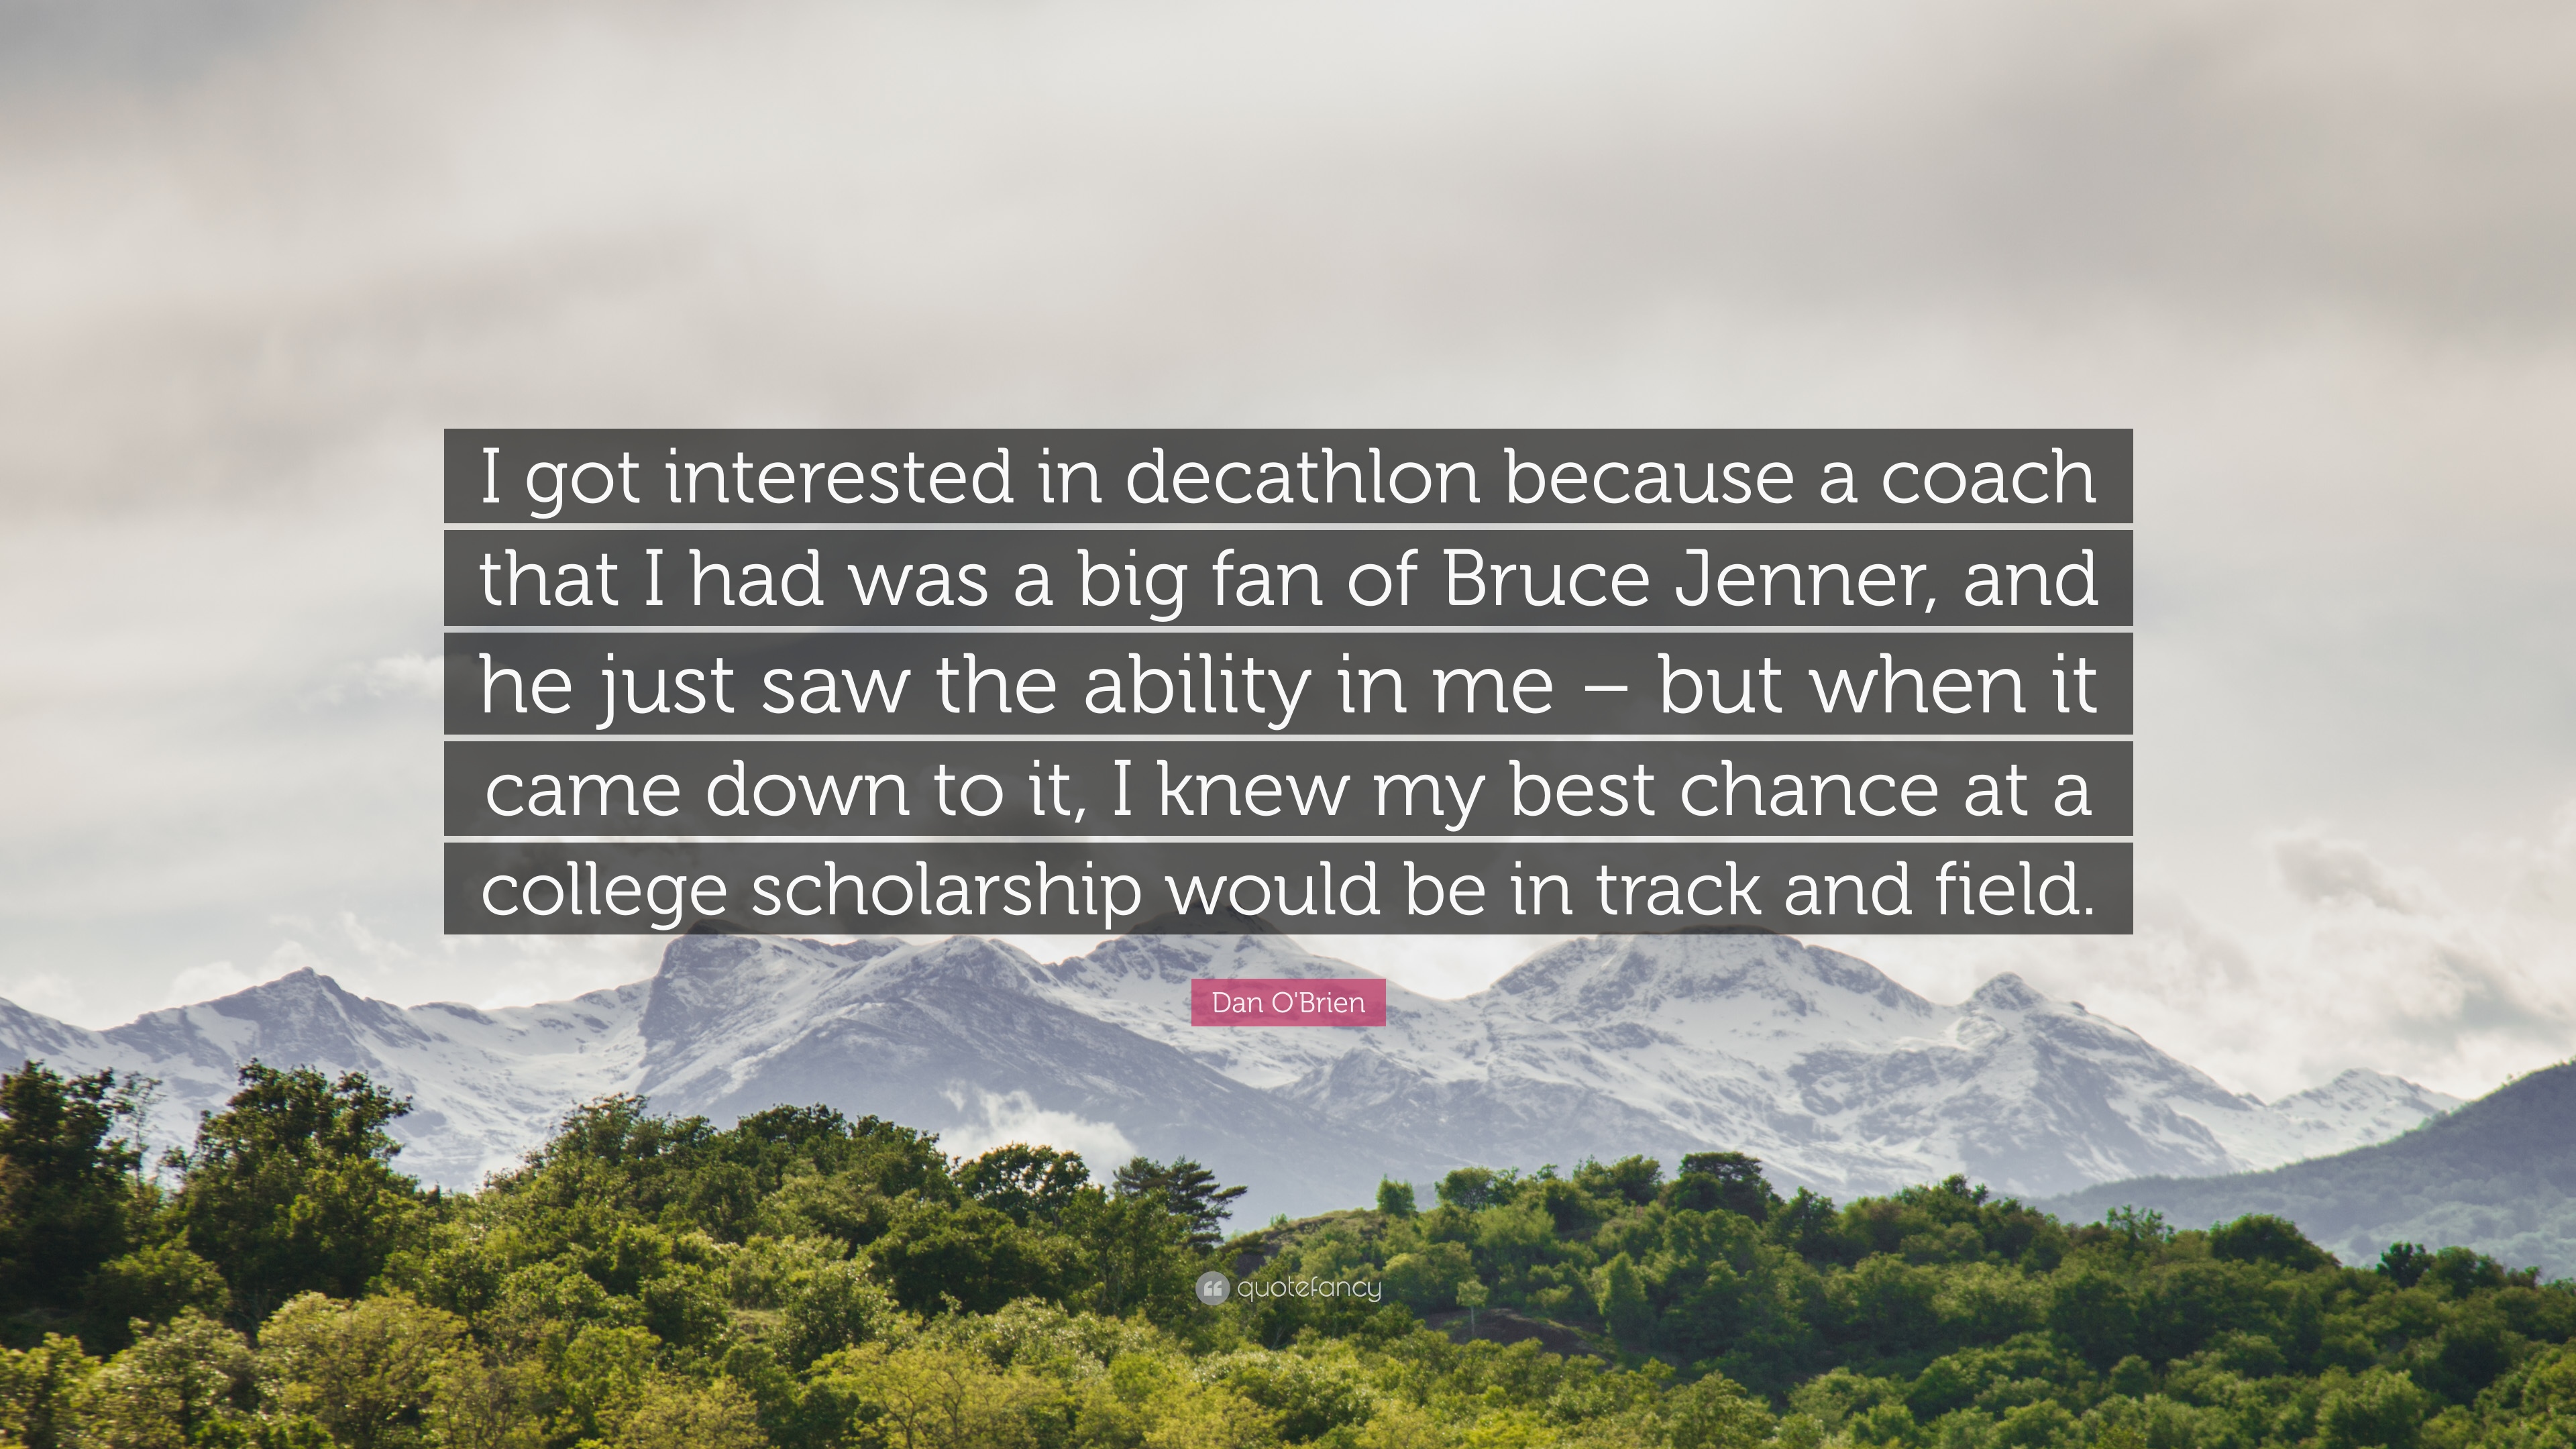 Dan O'Brien Quote: “I got interested in decathlon because a coach